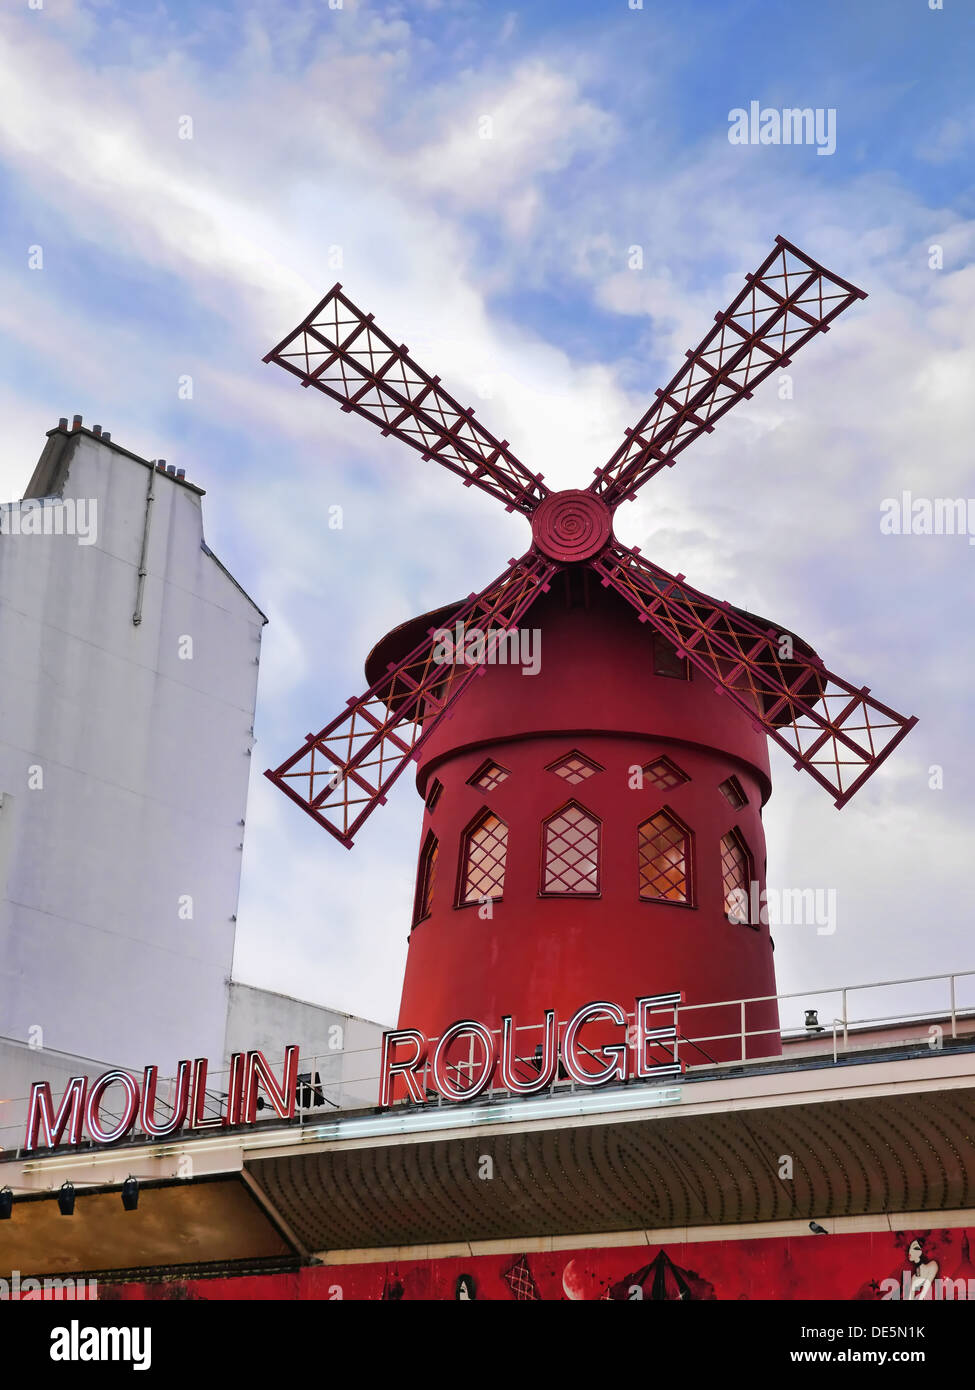 El famoso cabaret Moulin Rouge edificio en Paris, Francia Foto de stock